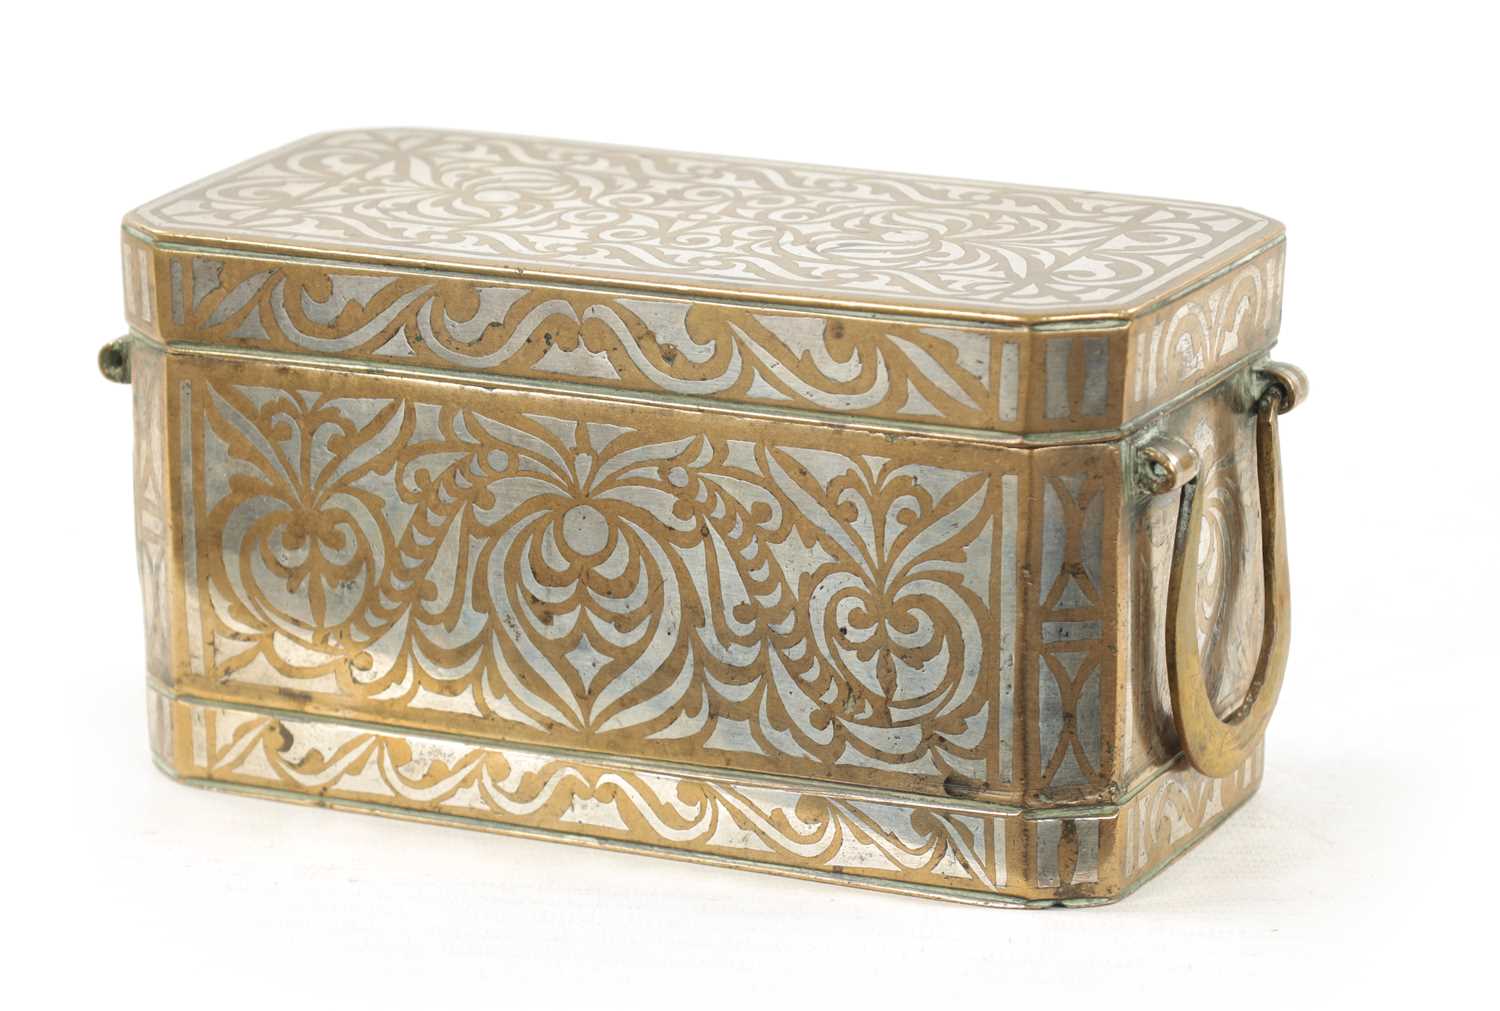 A LATE 19TH CENTURY MARANOA SILVER INLAID BRONZE BETEL NUT BOX